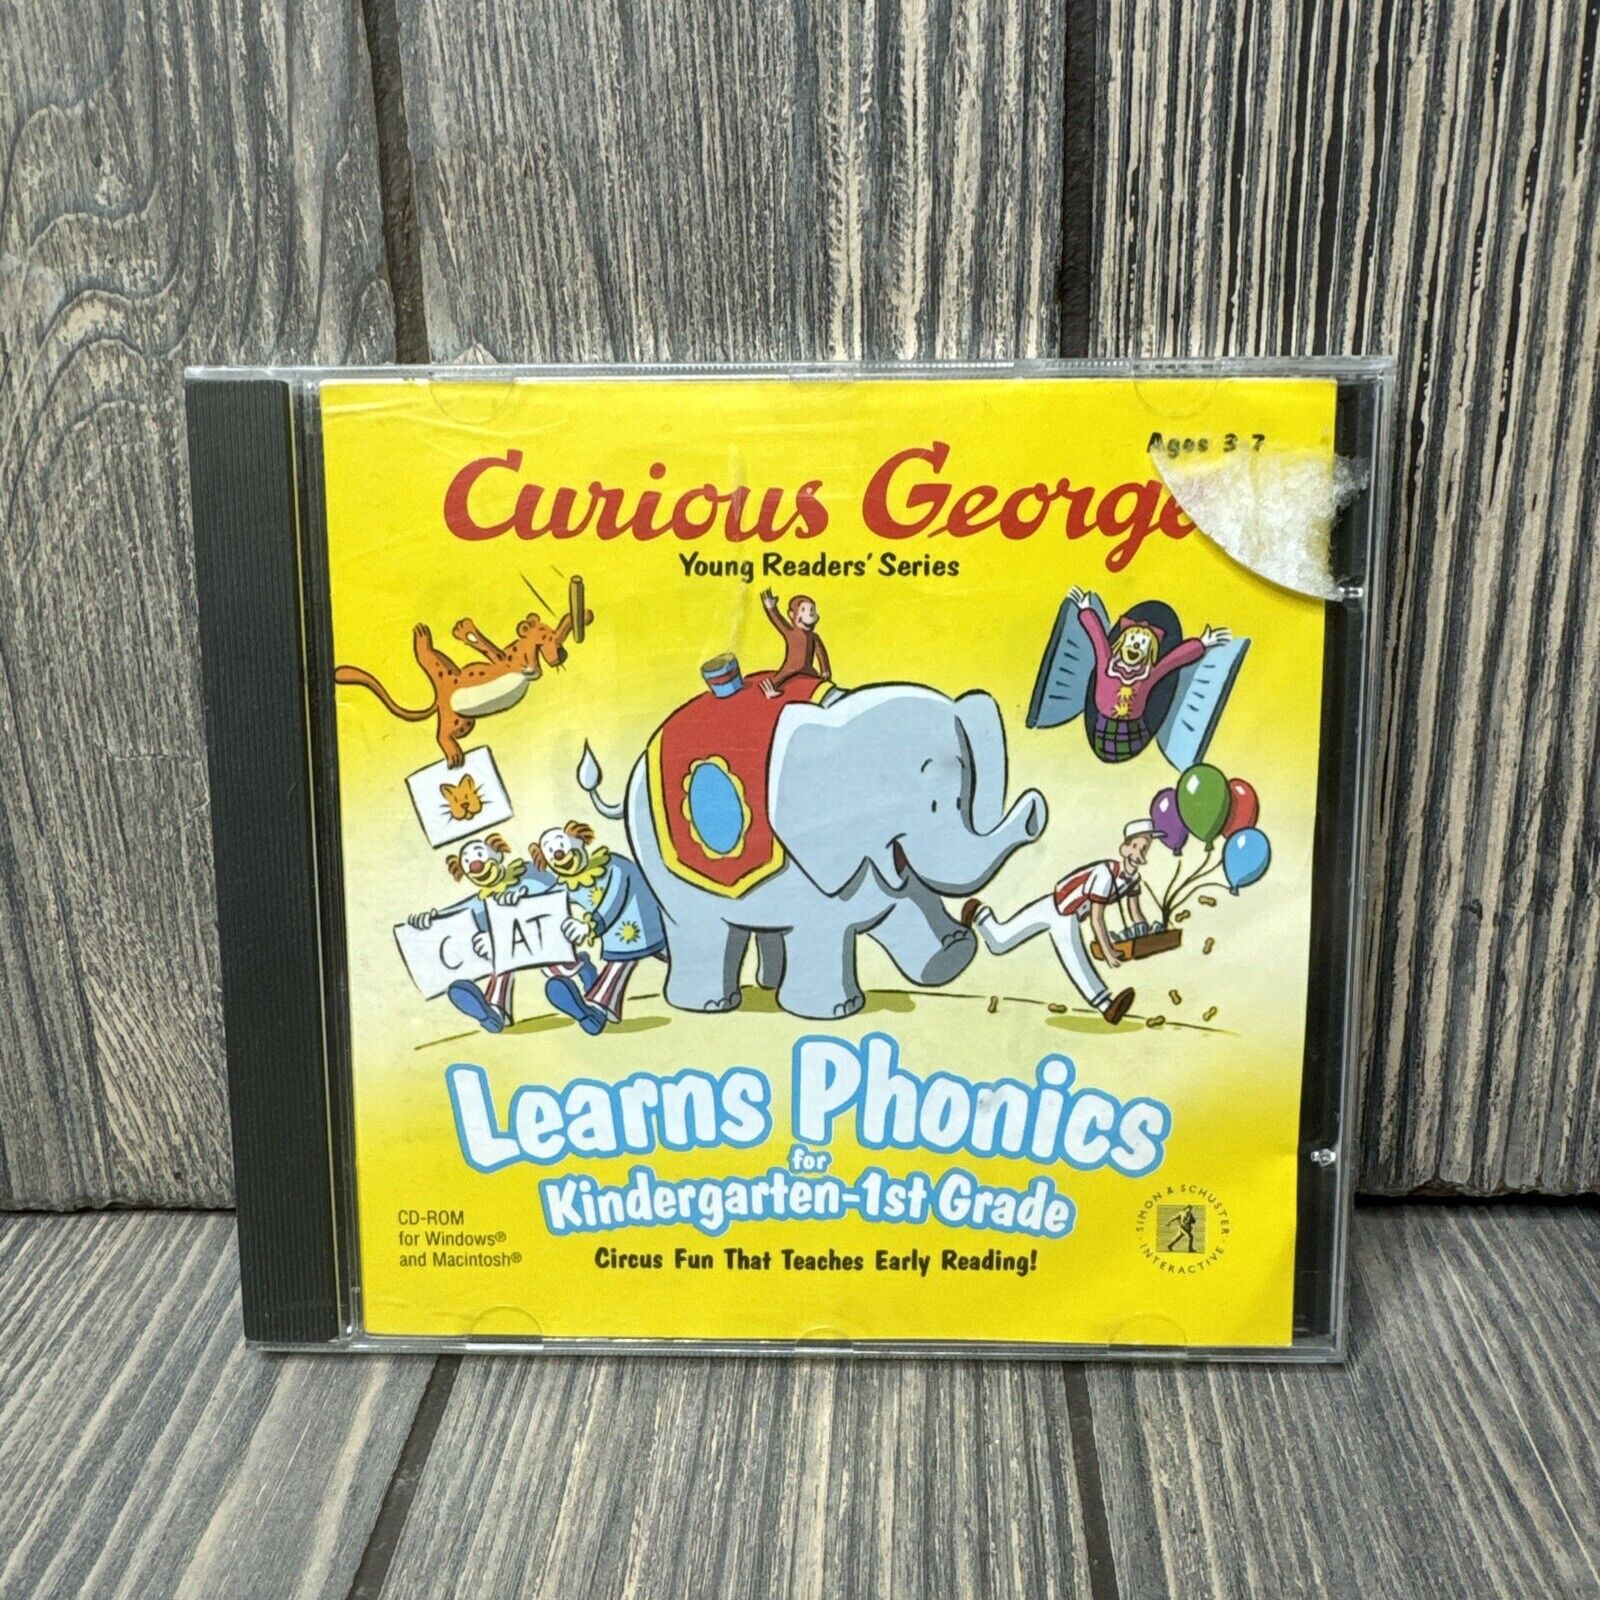 Curious George Learns Phonics K-1st Grade PC CD 2000 Simon & Schuster Win/Mac 